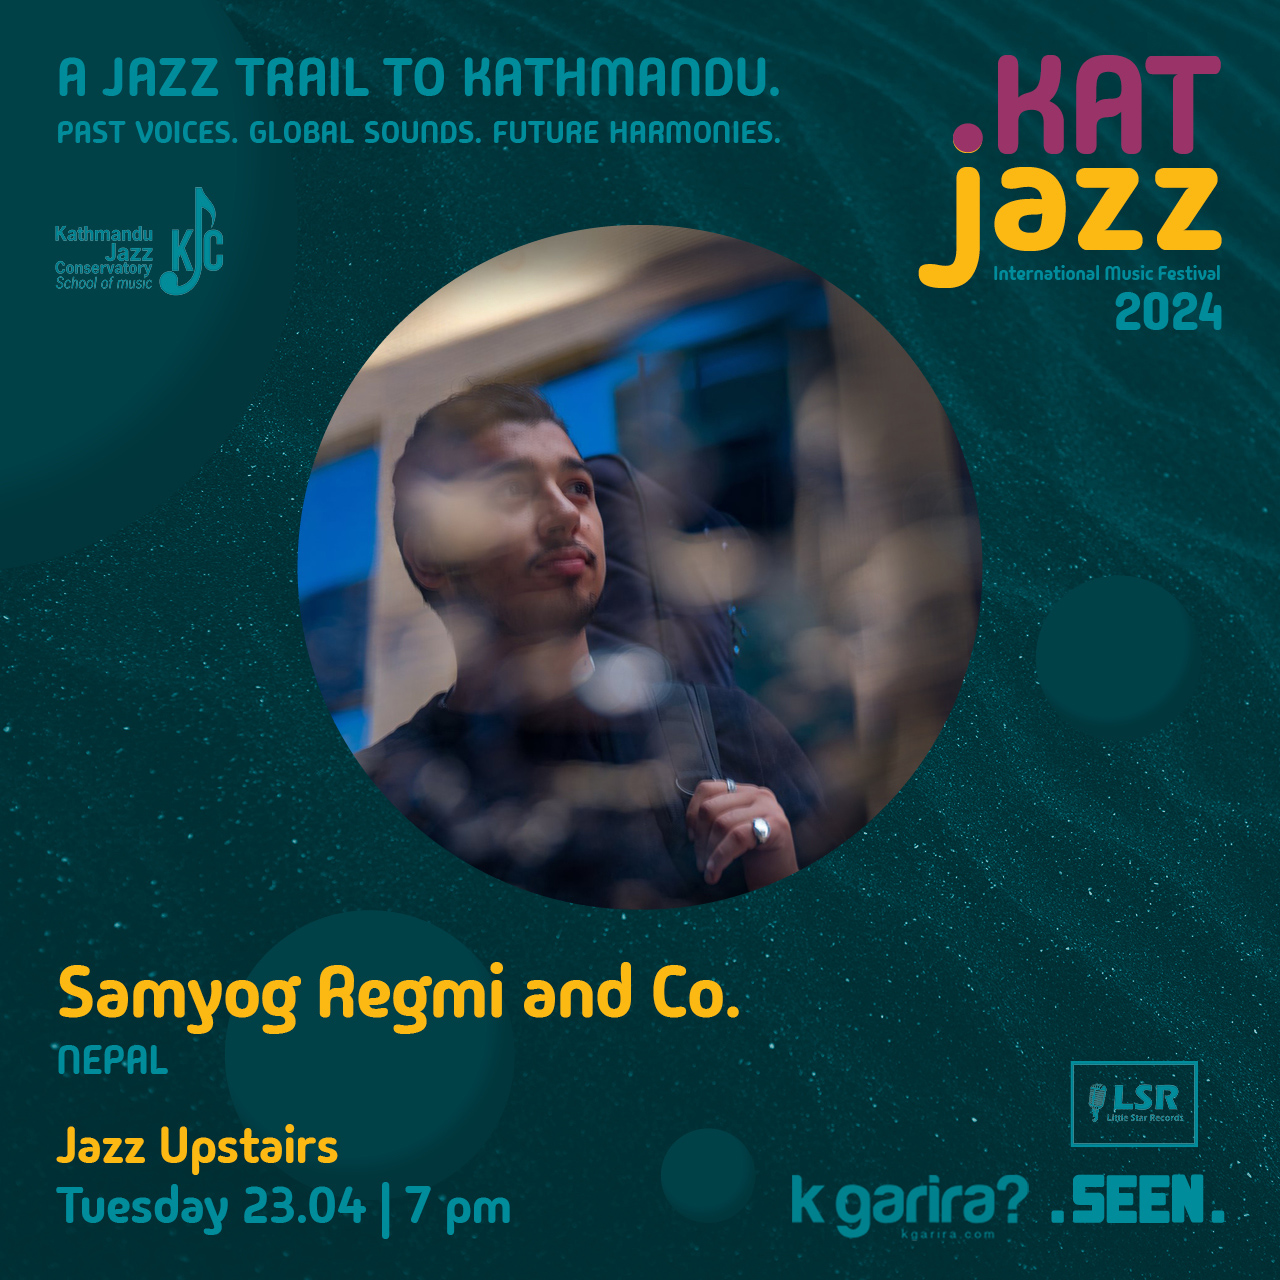 Kat Jazz - Samyog Regmi and co.